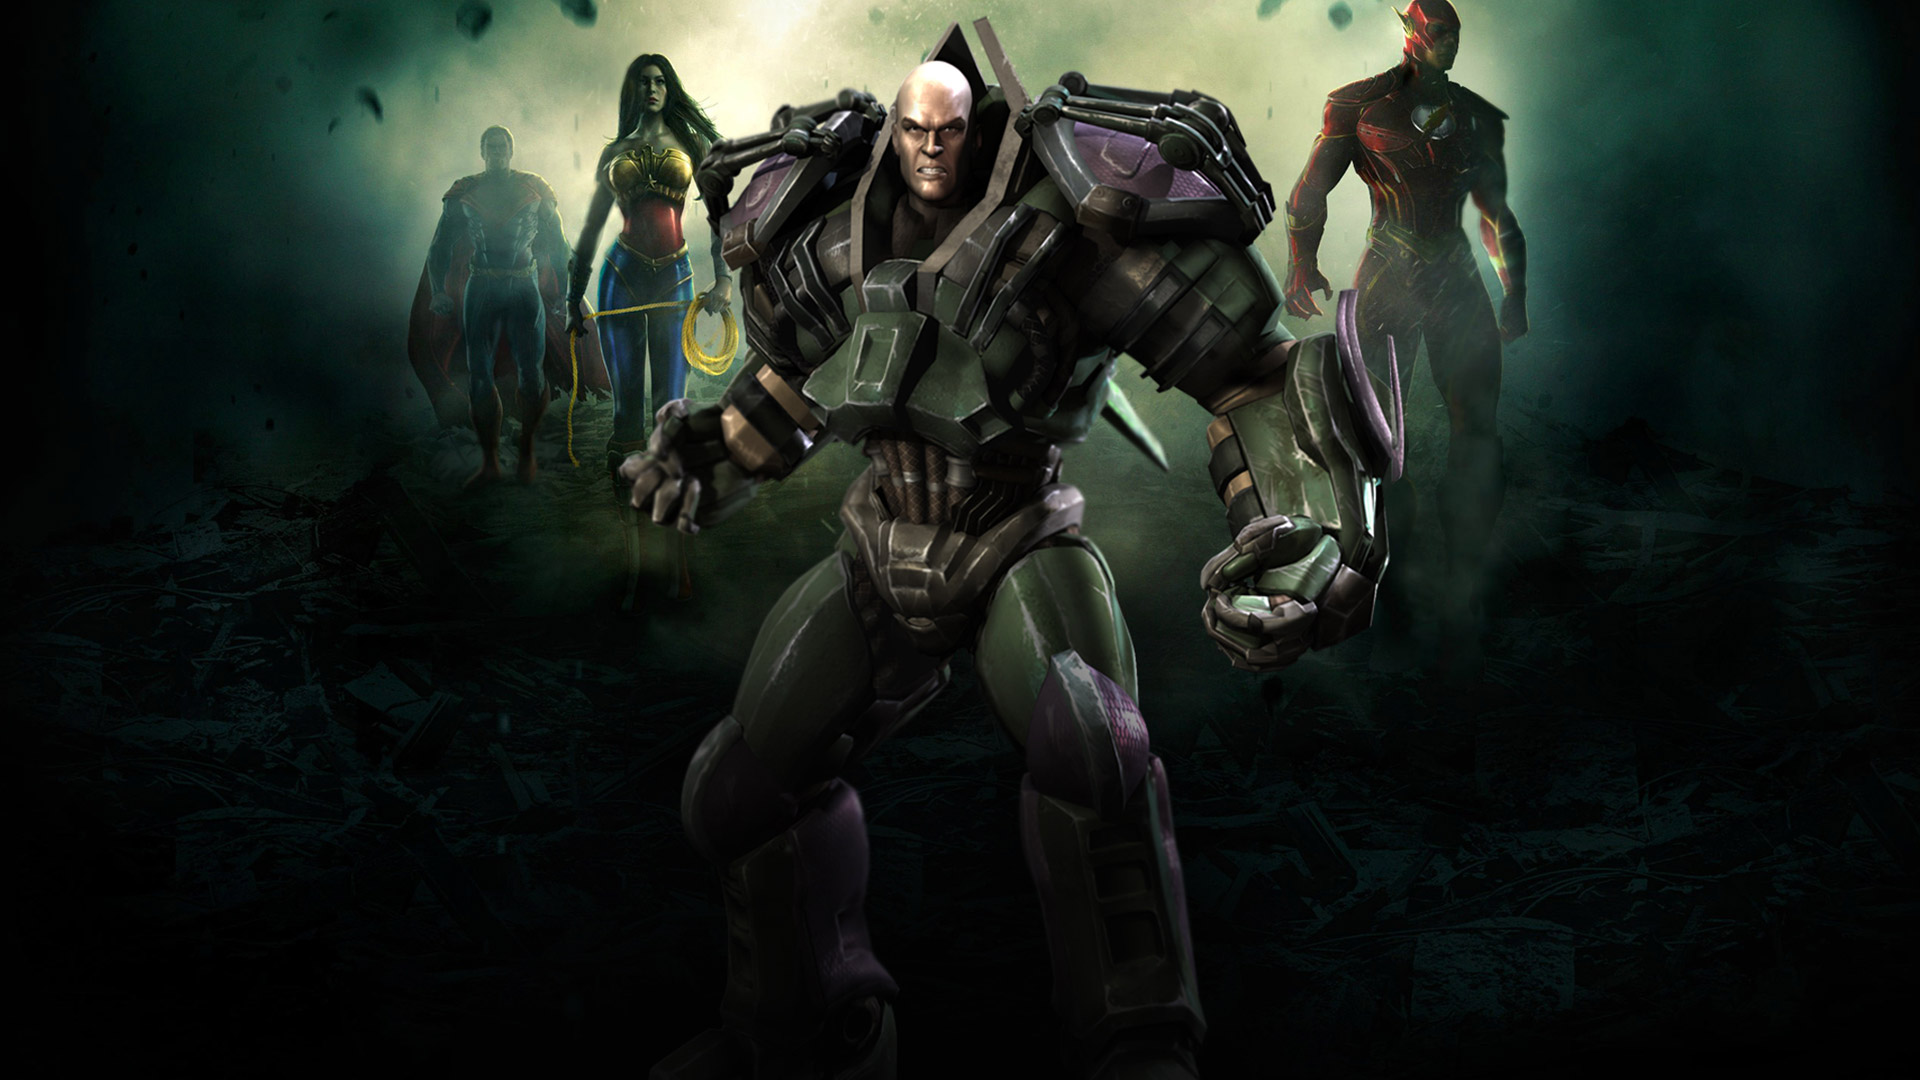 Lex Luthor Injustice Gods Among Us , HD Wallpaper & Backgrounds